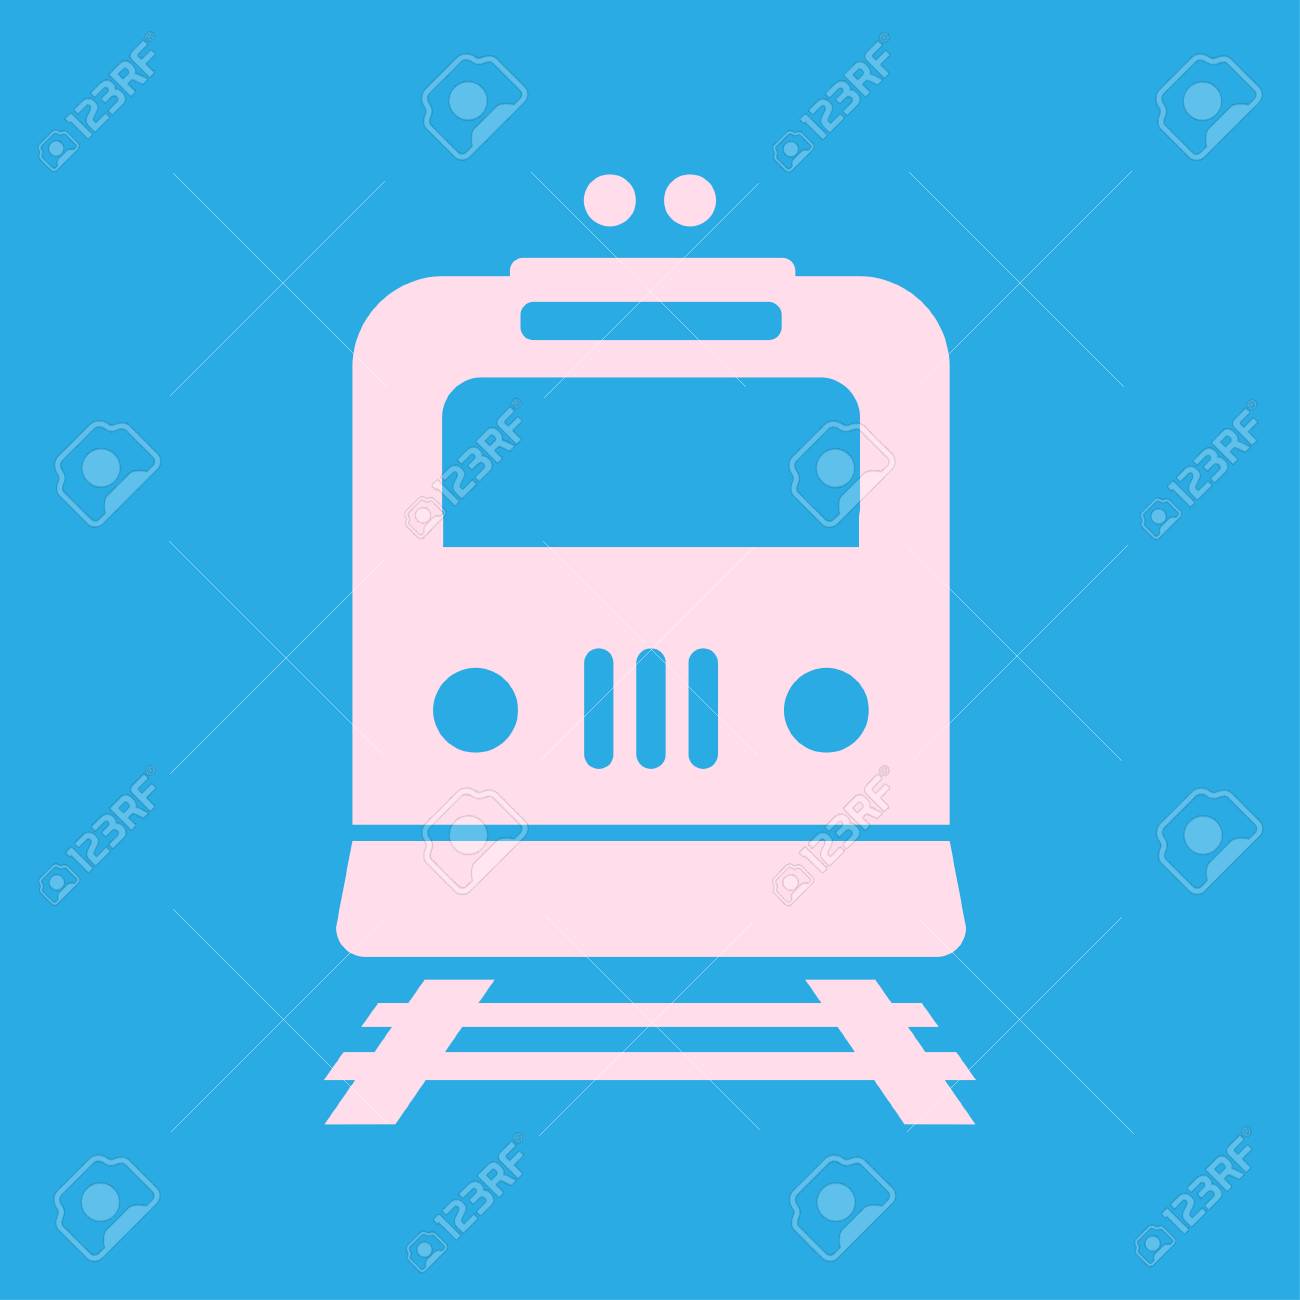 Metro-station icons | Noun Project